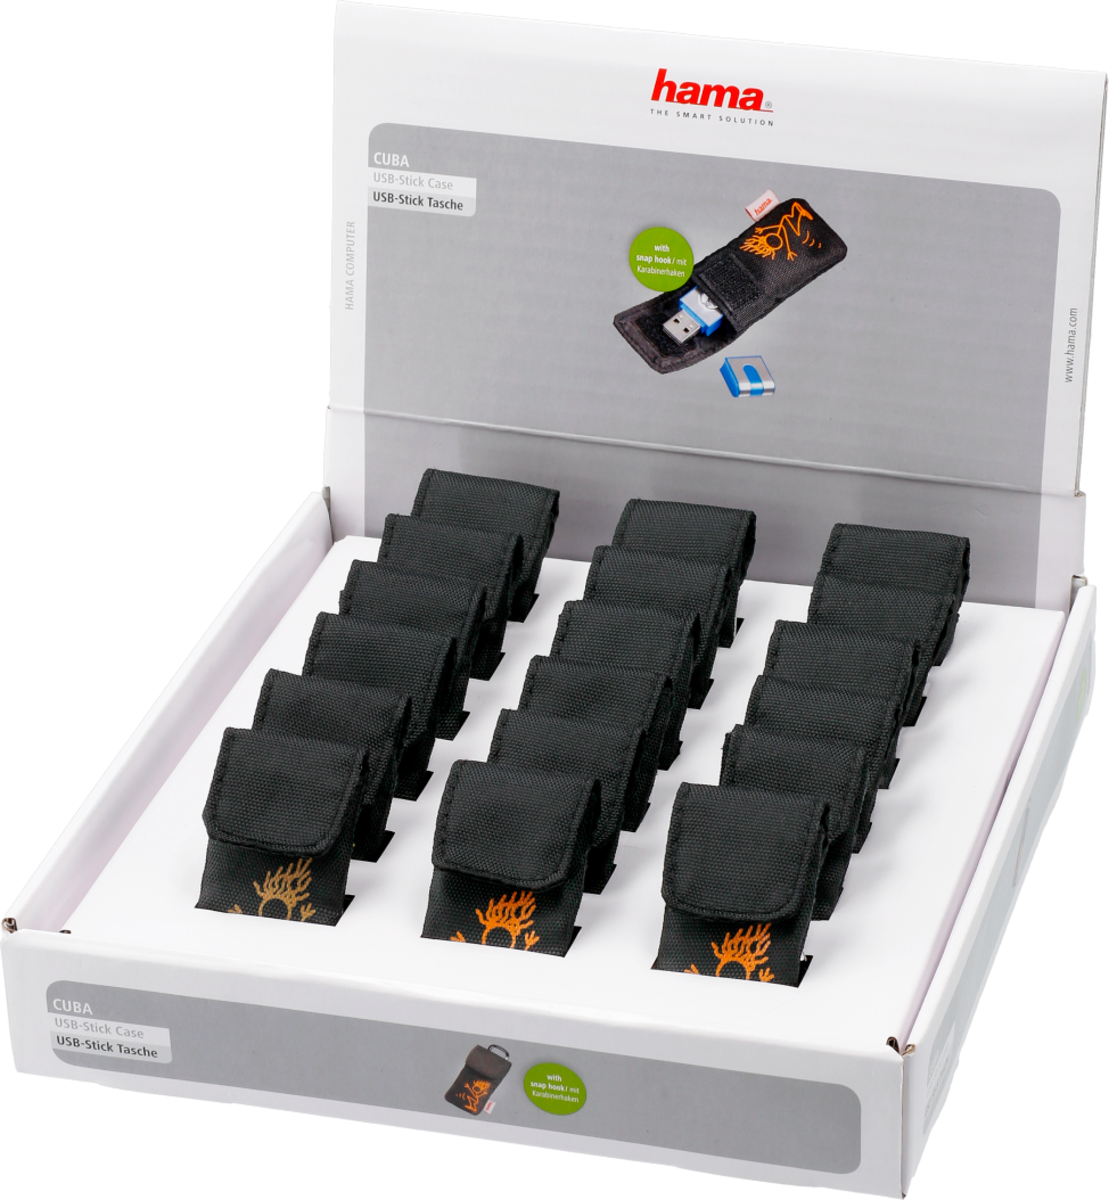 Hama Stick USB Cuba Cases Buy (00095620)